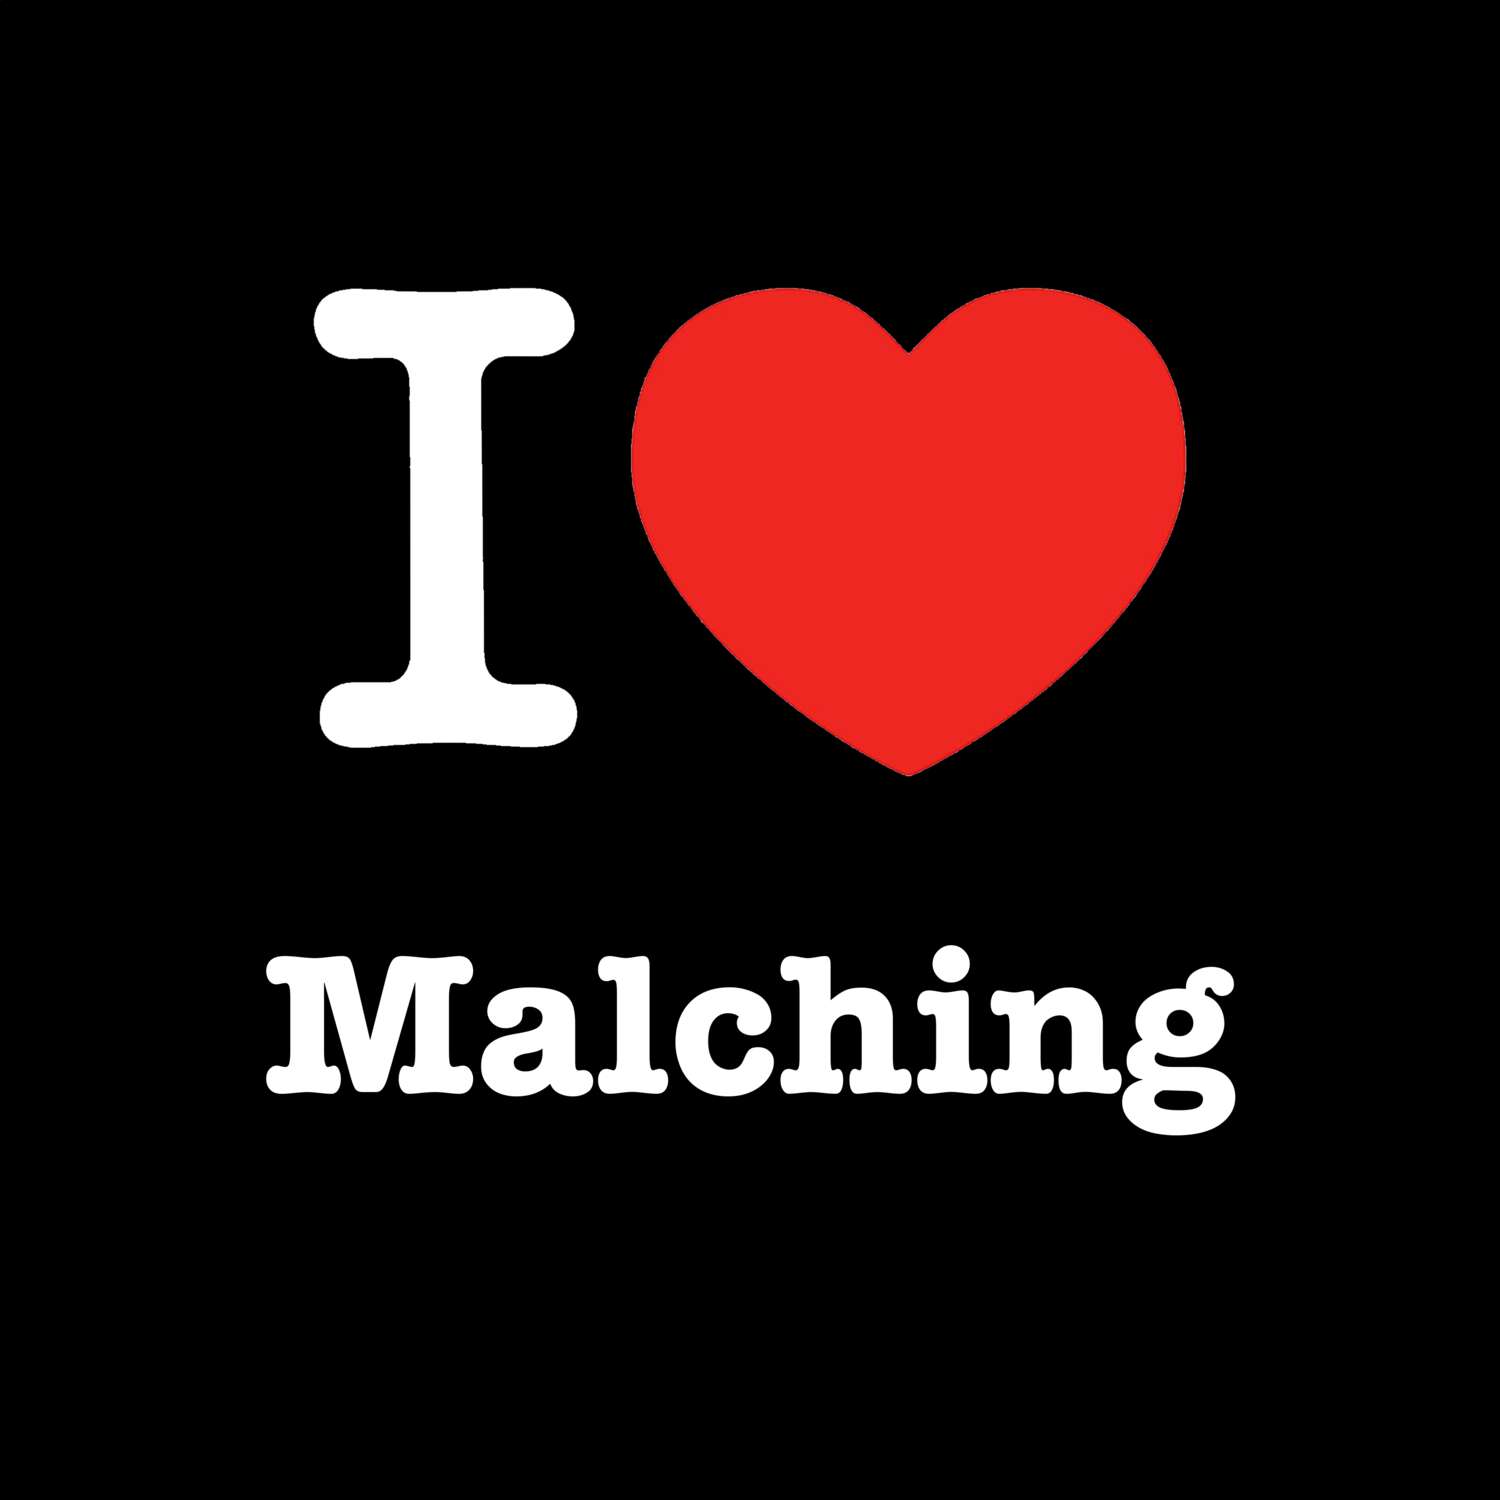 Malching T-Shirt »I love«